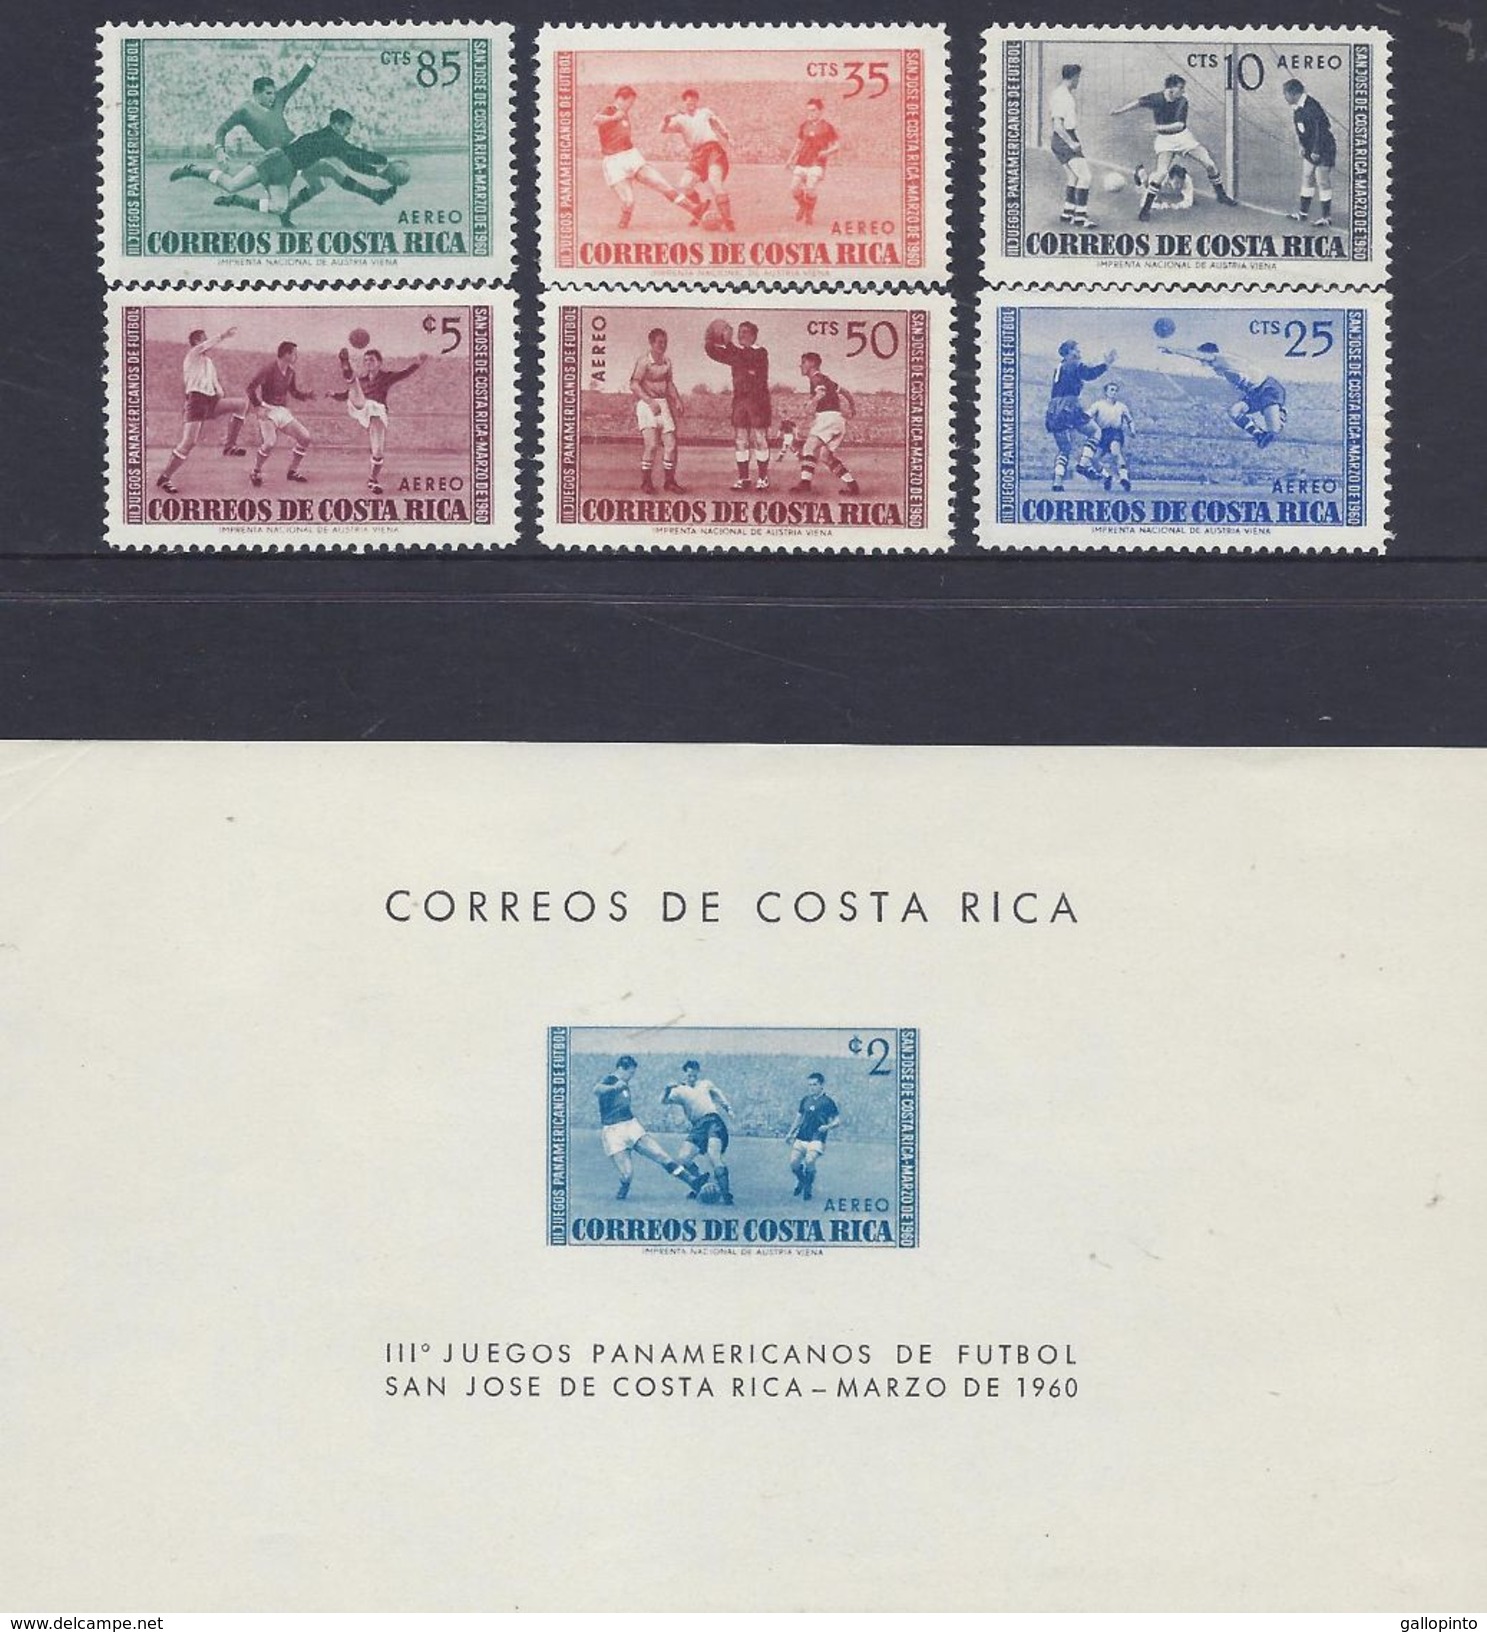 COSTA RICA PAN-AMERICAN SOCCER GAMES, SAN JOSE Sc C283-C289 MLH 1960 - Coppa America